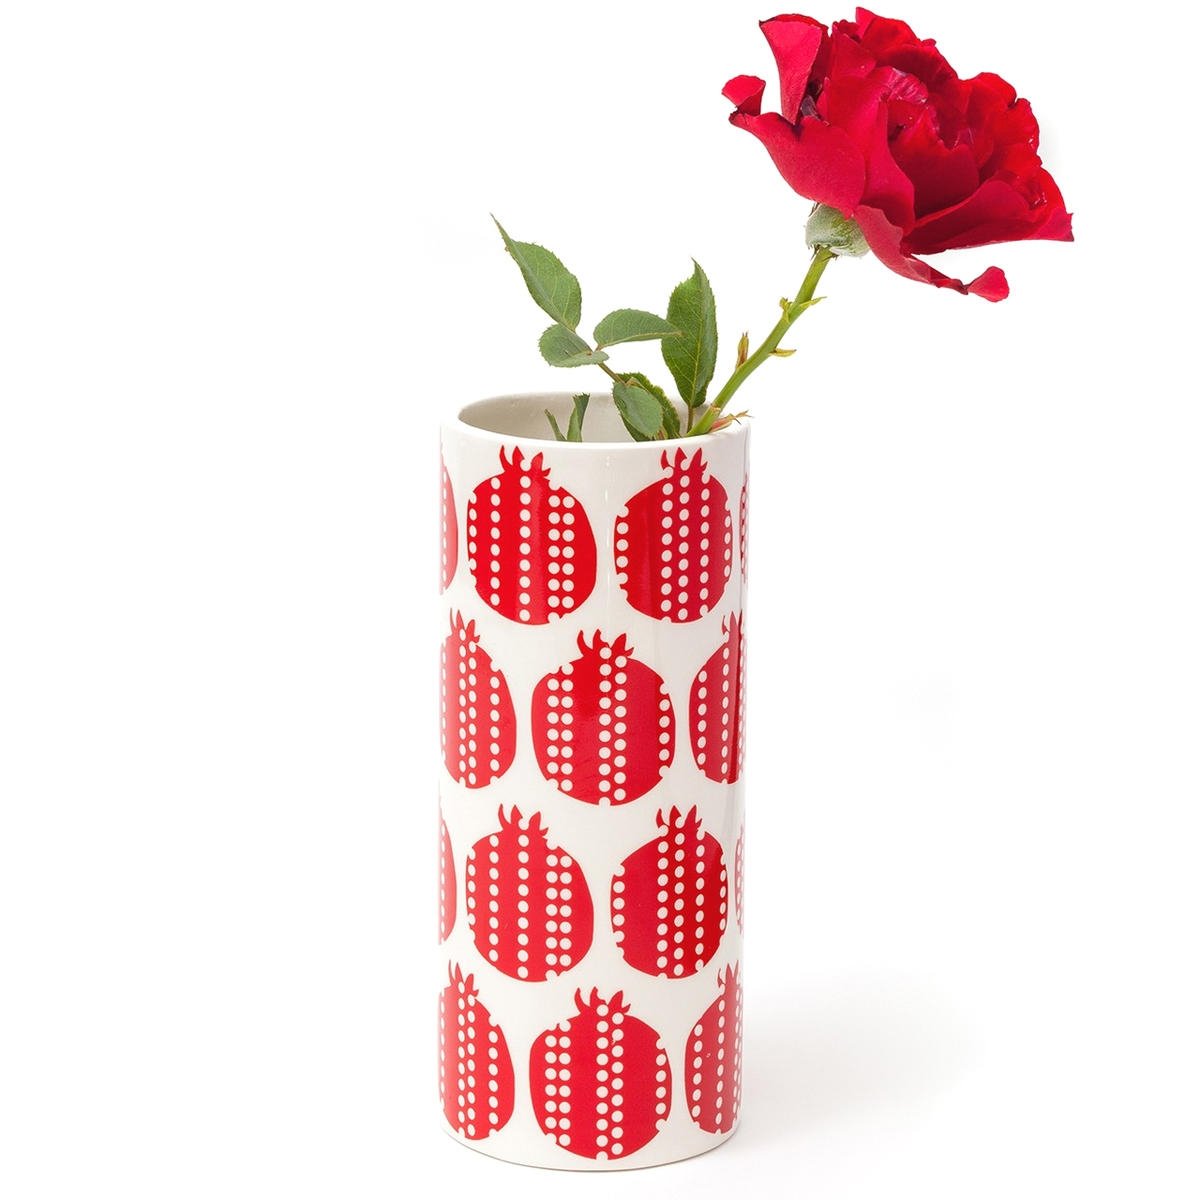 Barbara Shaw Pomegranate Vase - 1